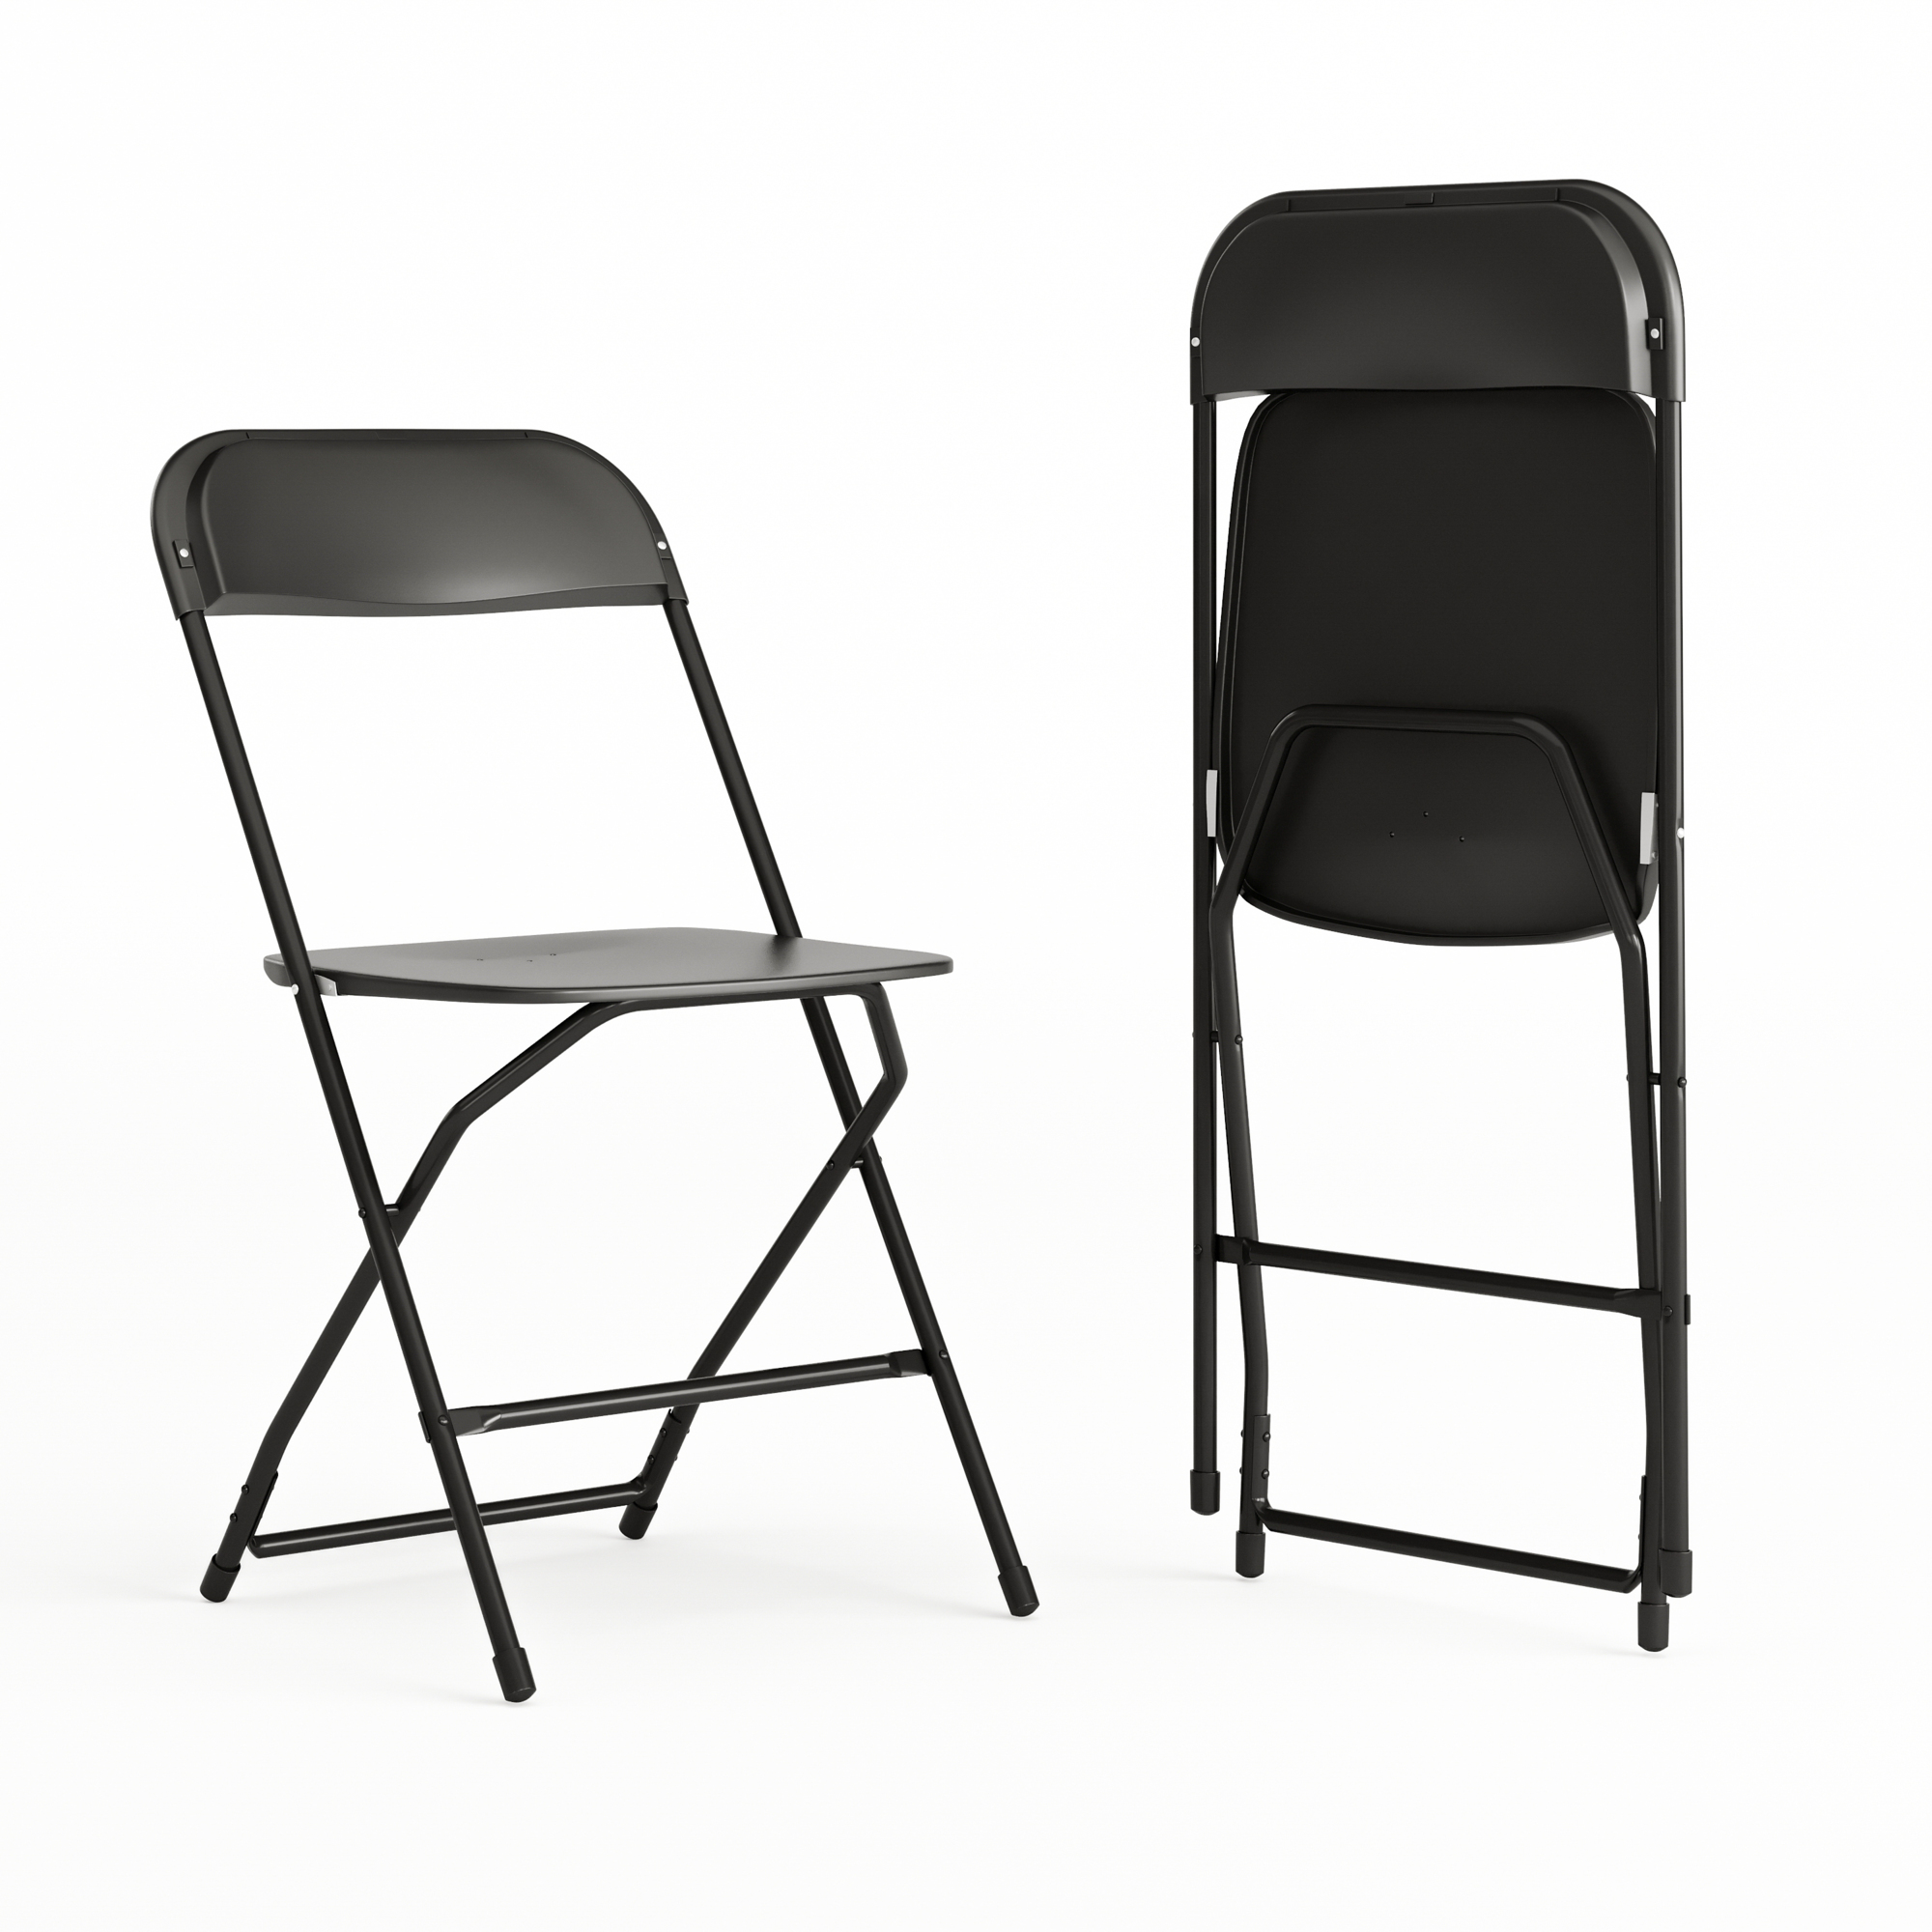 Flash Furniture, Folding Chair - Black Plastic - 2 Pack, Primary Color Black, Included (qty.) 2, Model 2LEL3BLACK